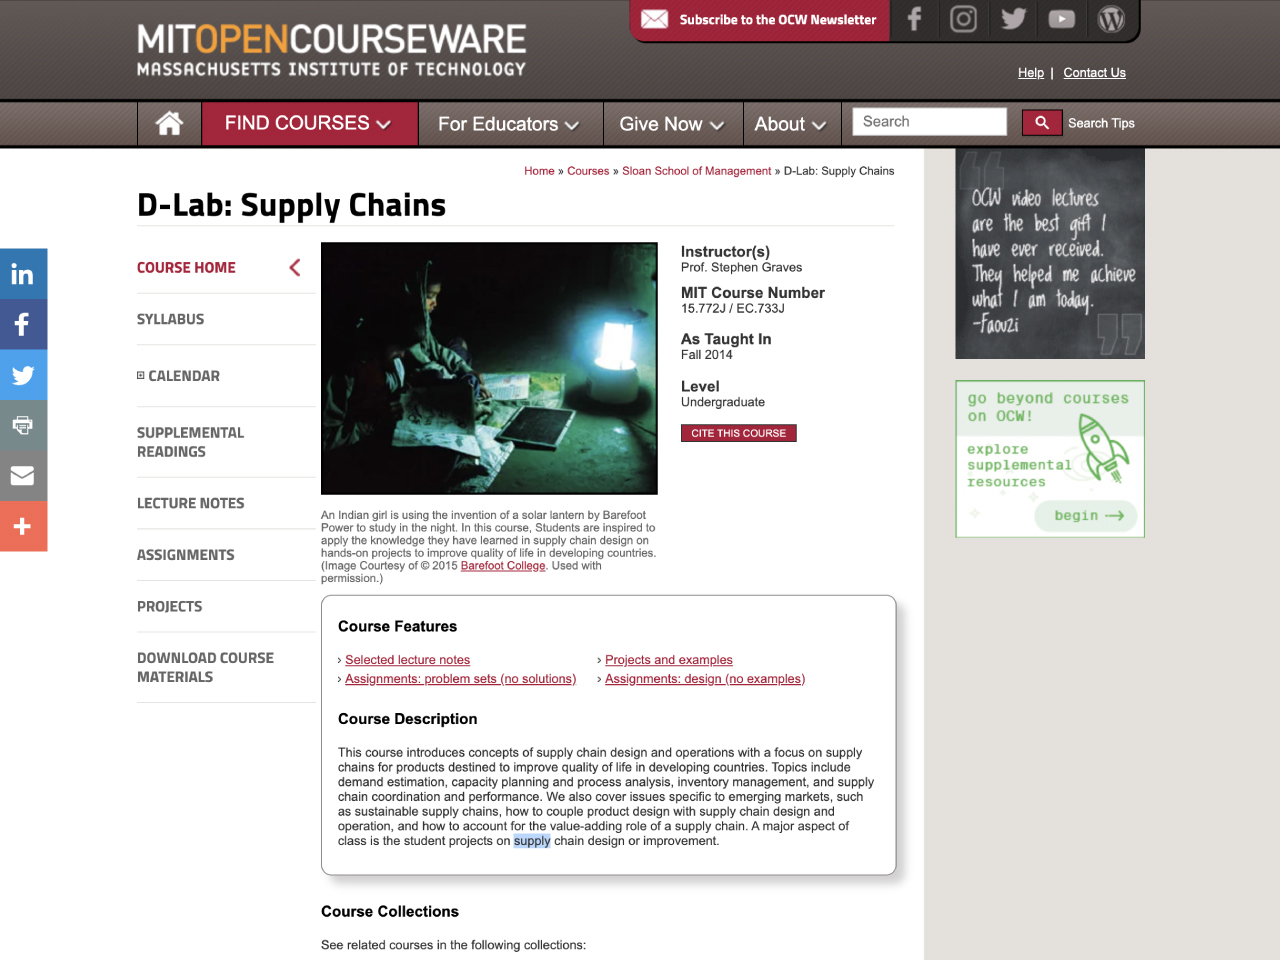 D-Lab: Supply Chains